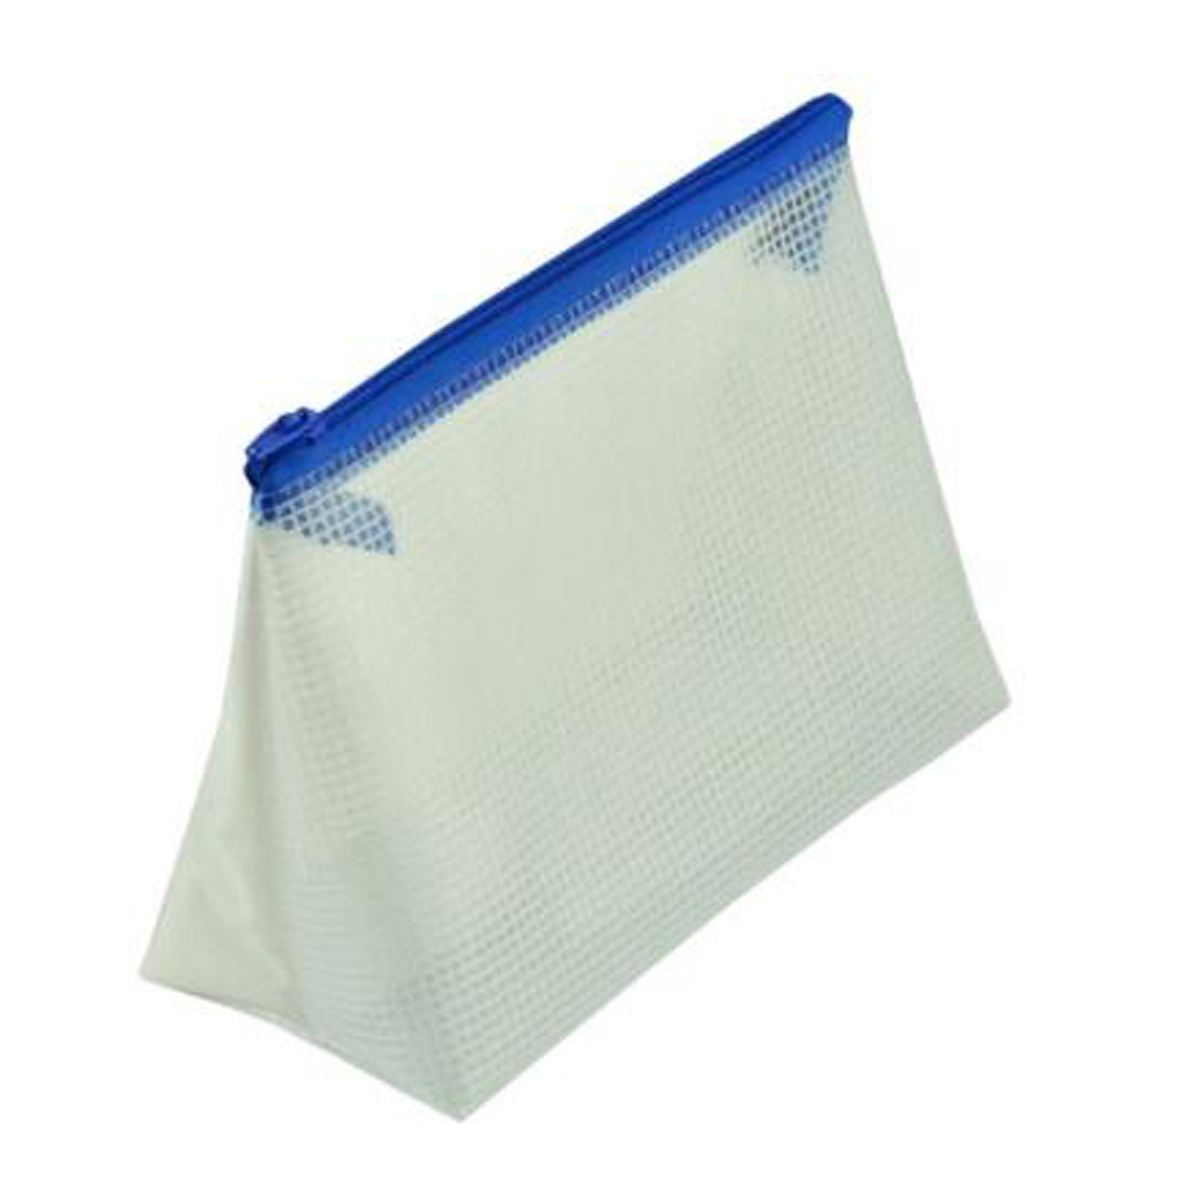 GL-ELY1236 Transparent PVC Mesh Cosmetic Bag